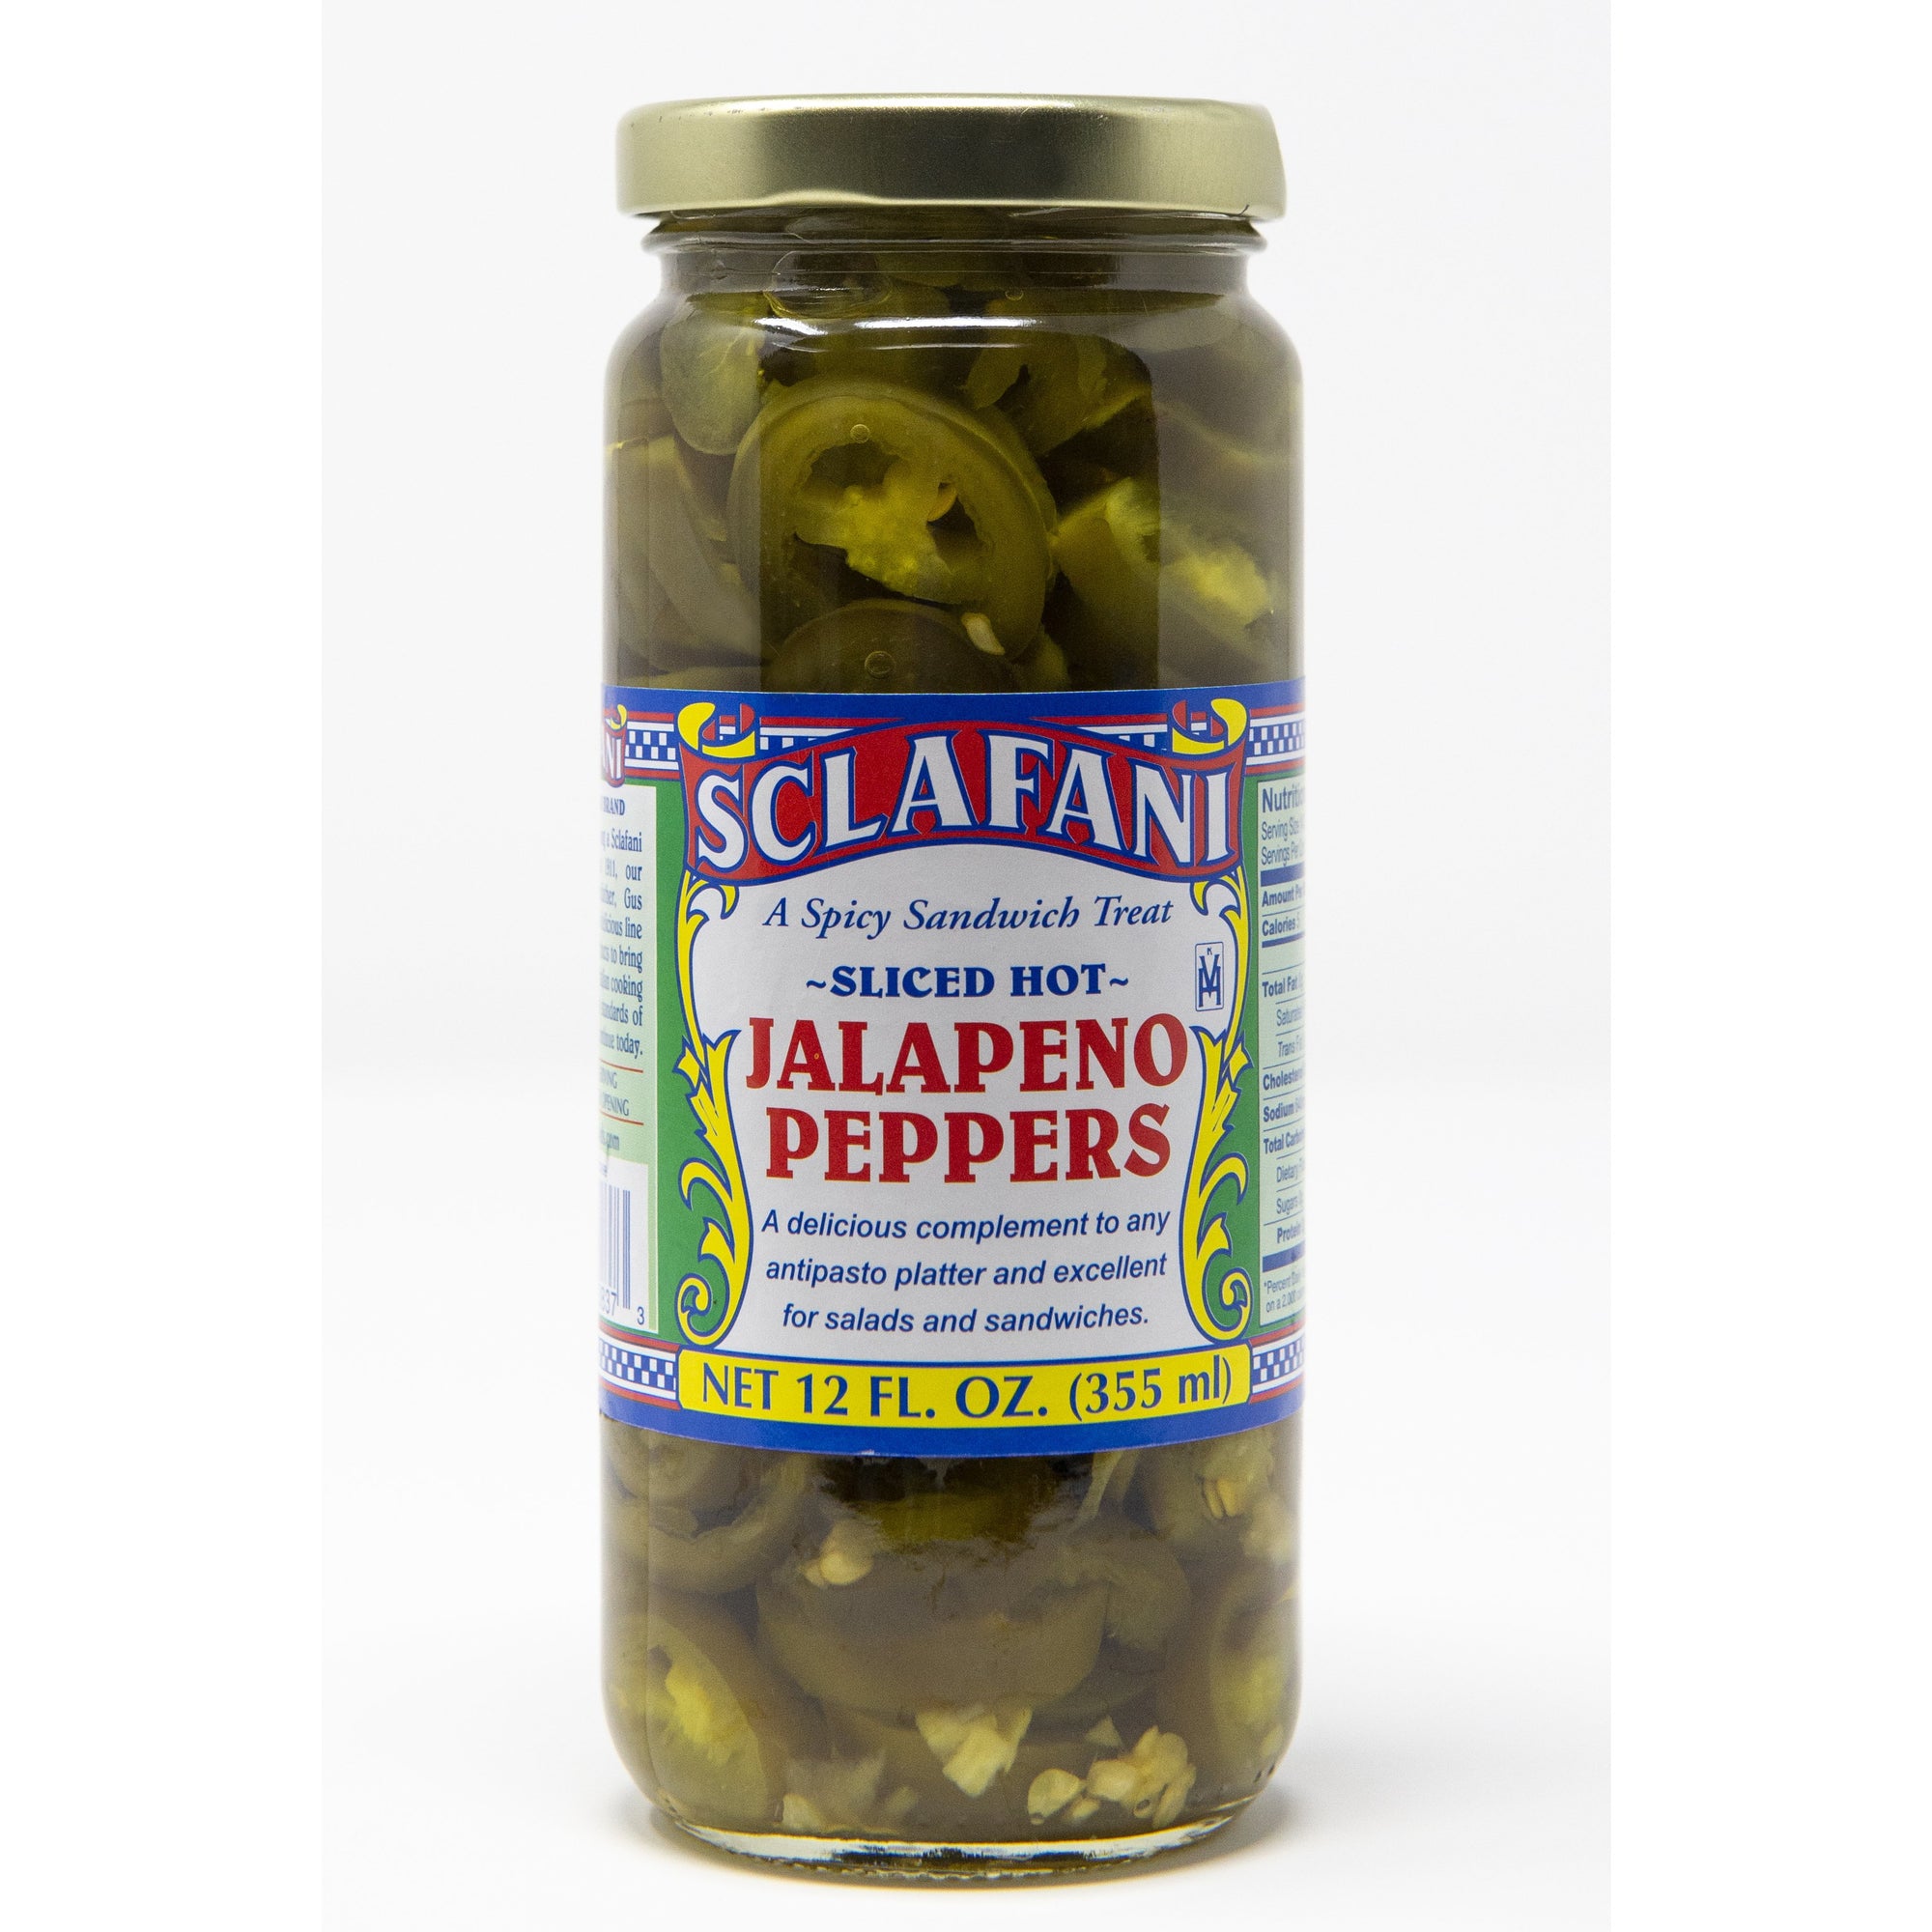 Sclafani Hot Sliced Jalapeno Peppers 12 oz.